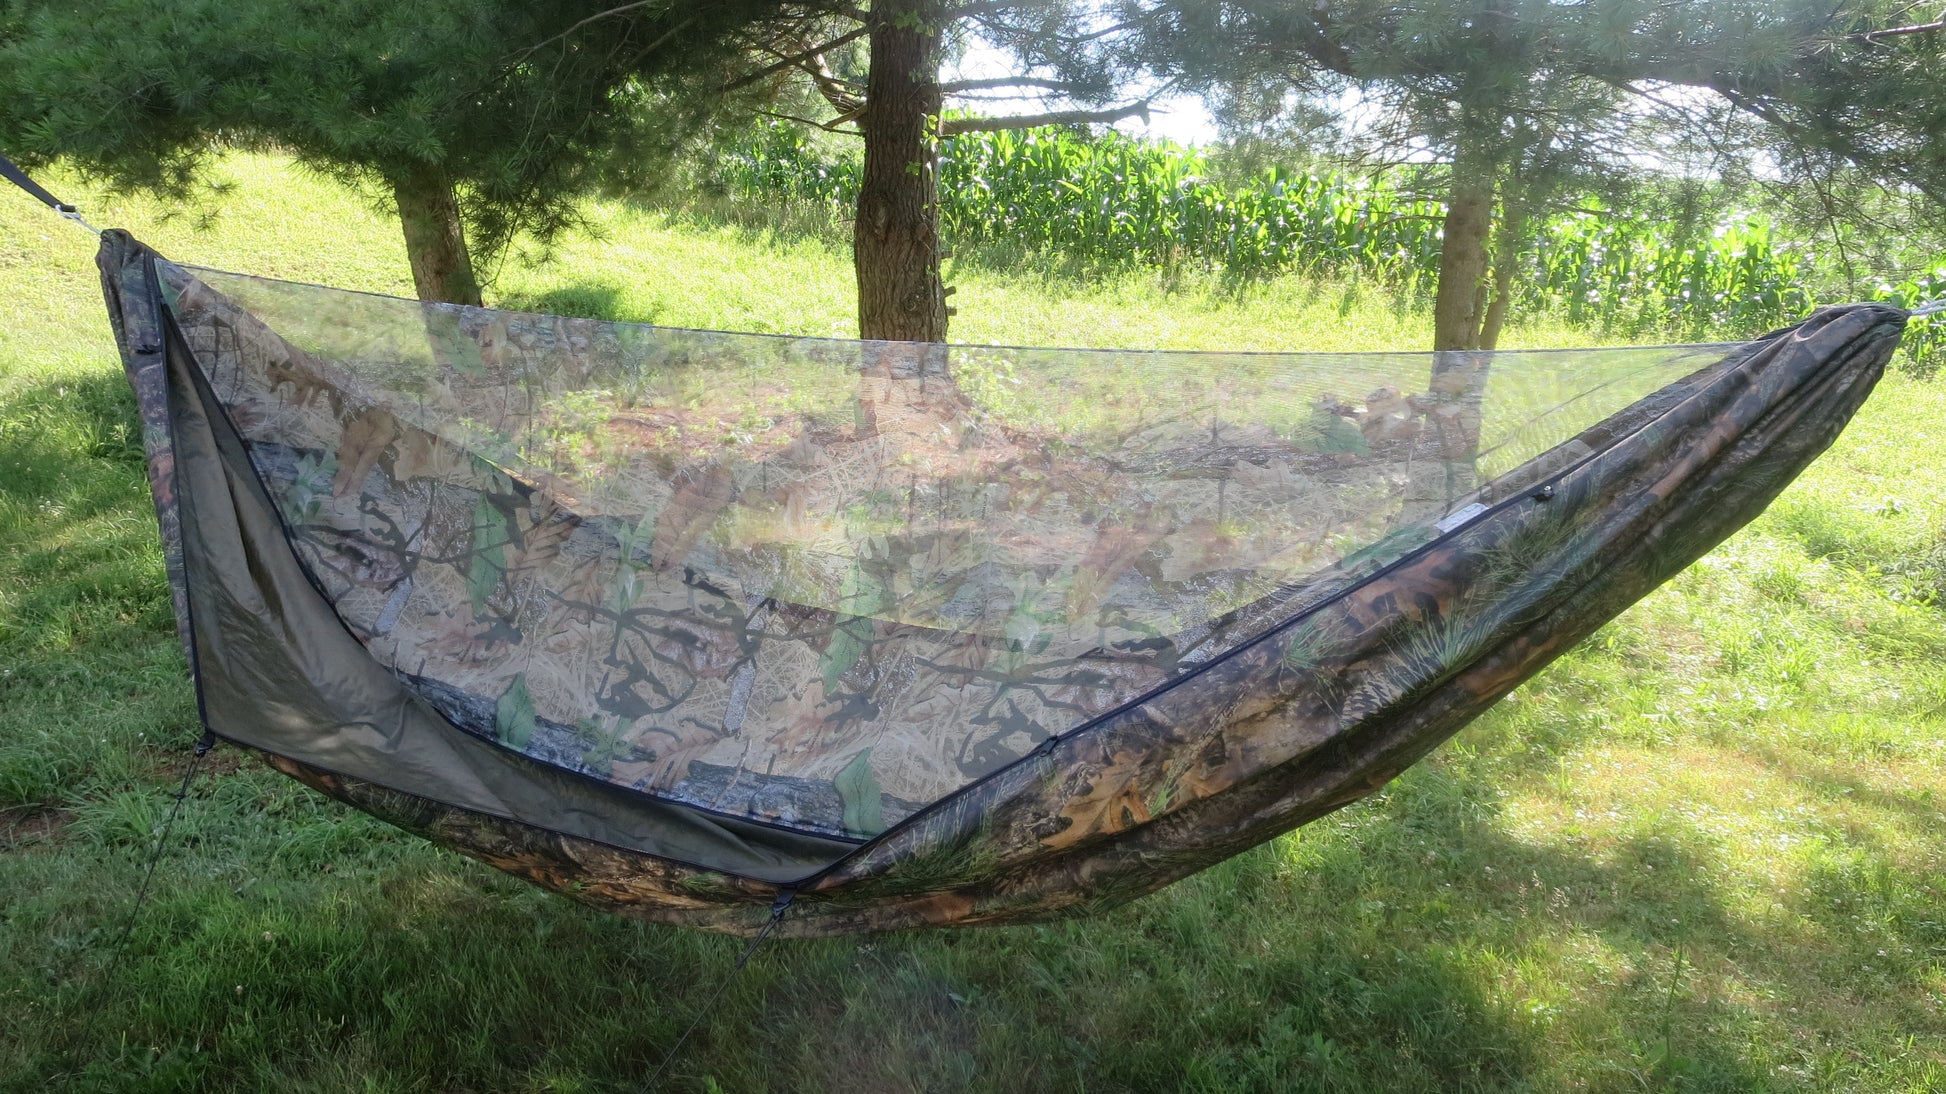 open camo leaf scatter net ultralight camping hammock custom made dream hammock with bugnet or mosquito net best